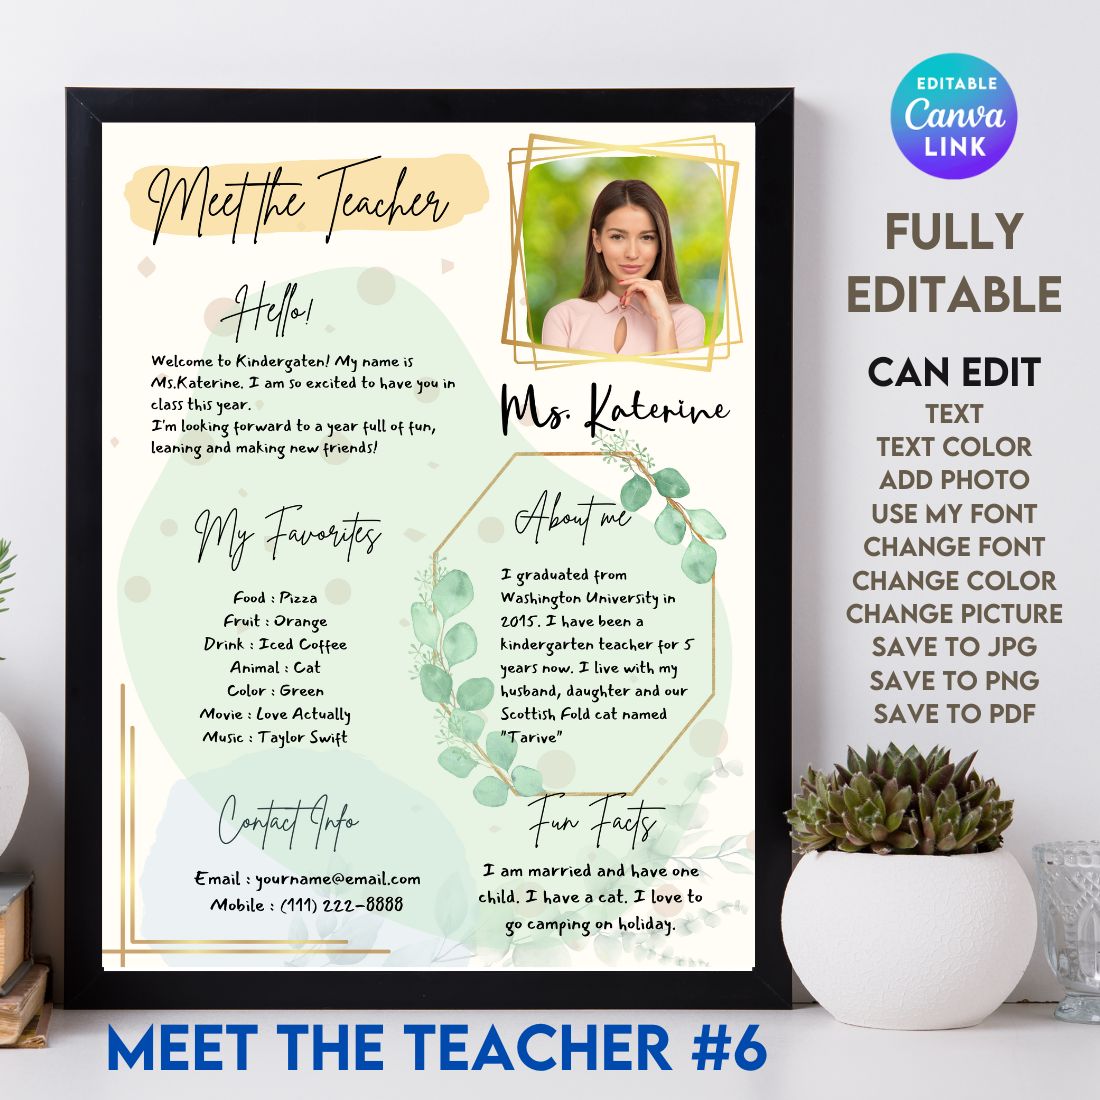 Meet The Teacher #6 – Canva Template cover image.